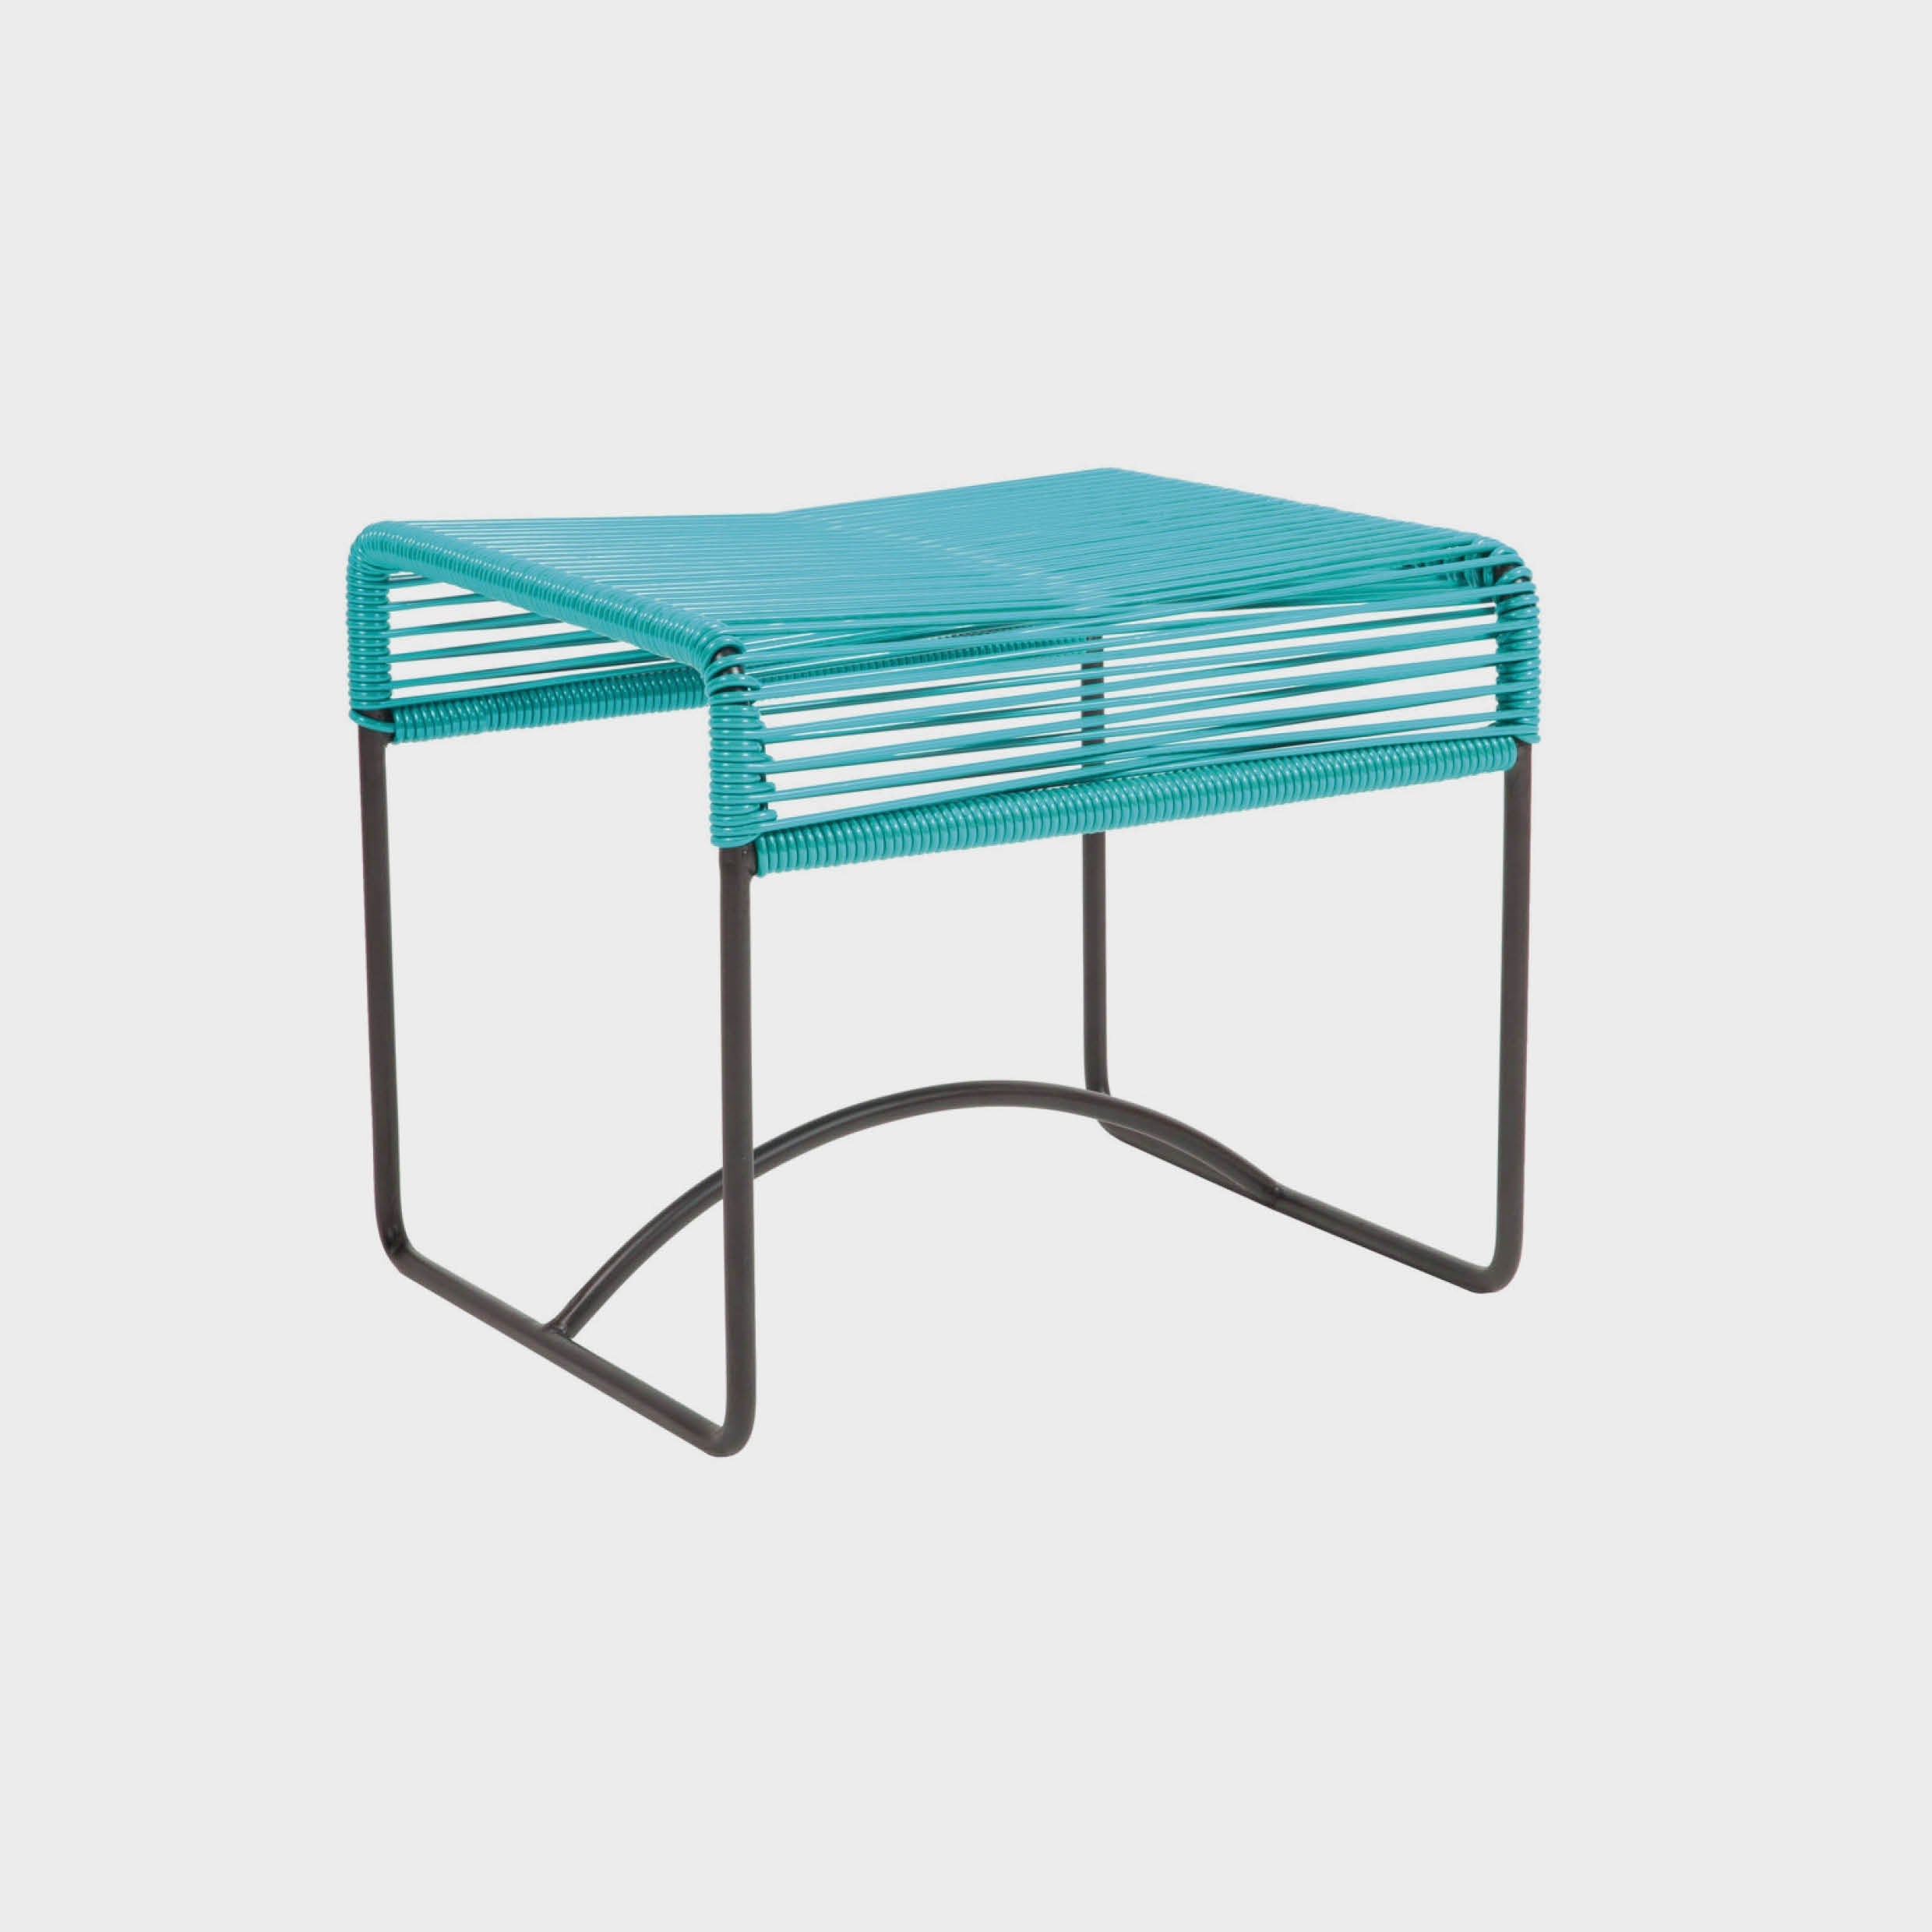 Design stool Aqua Verde